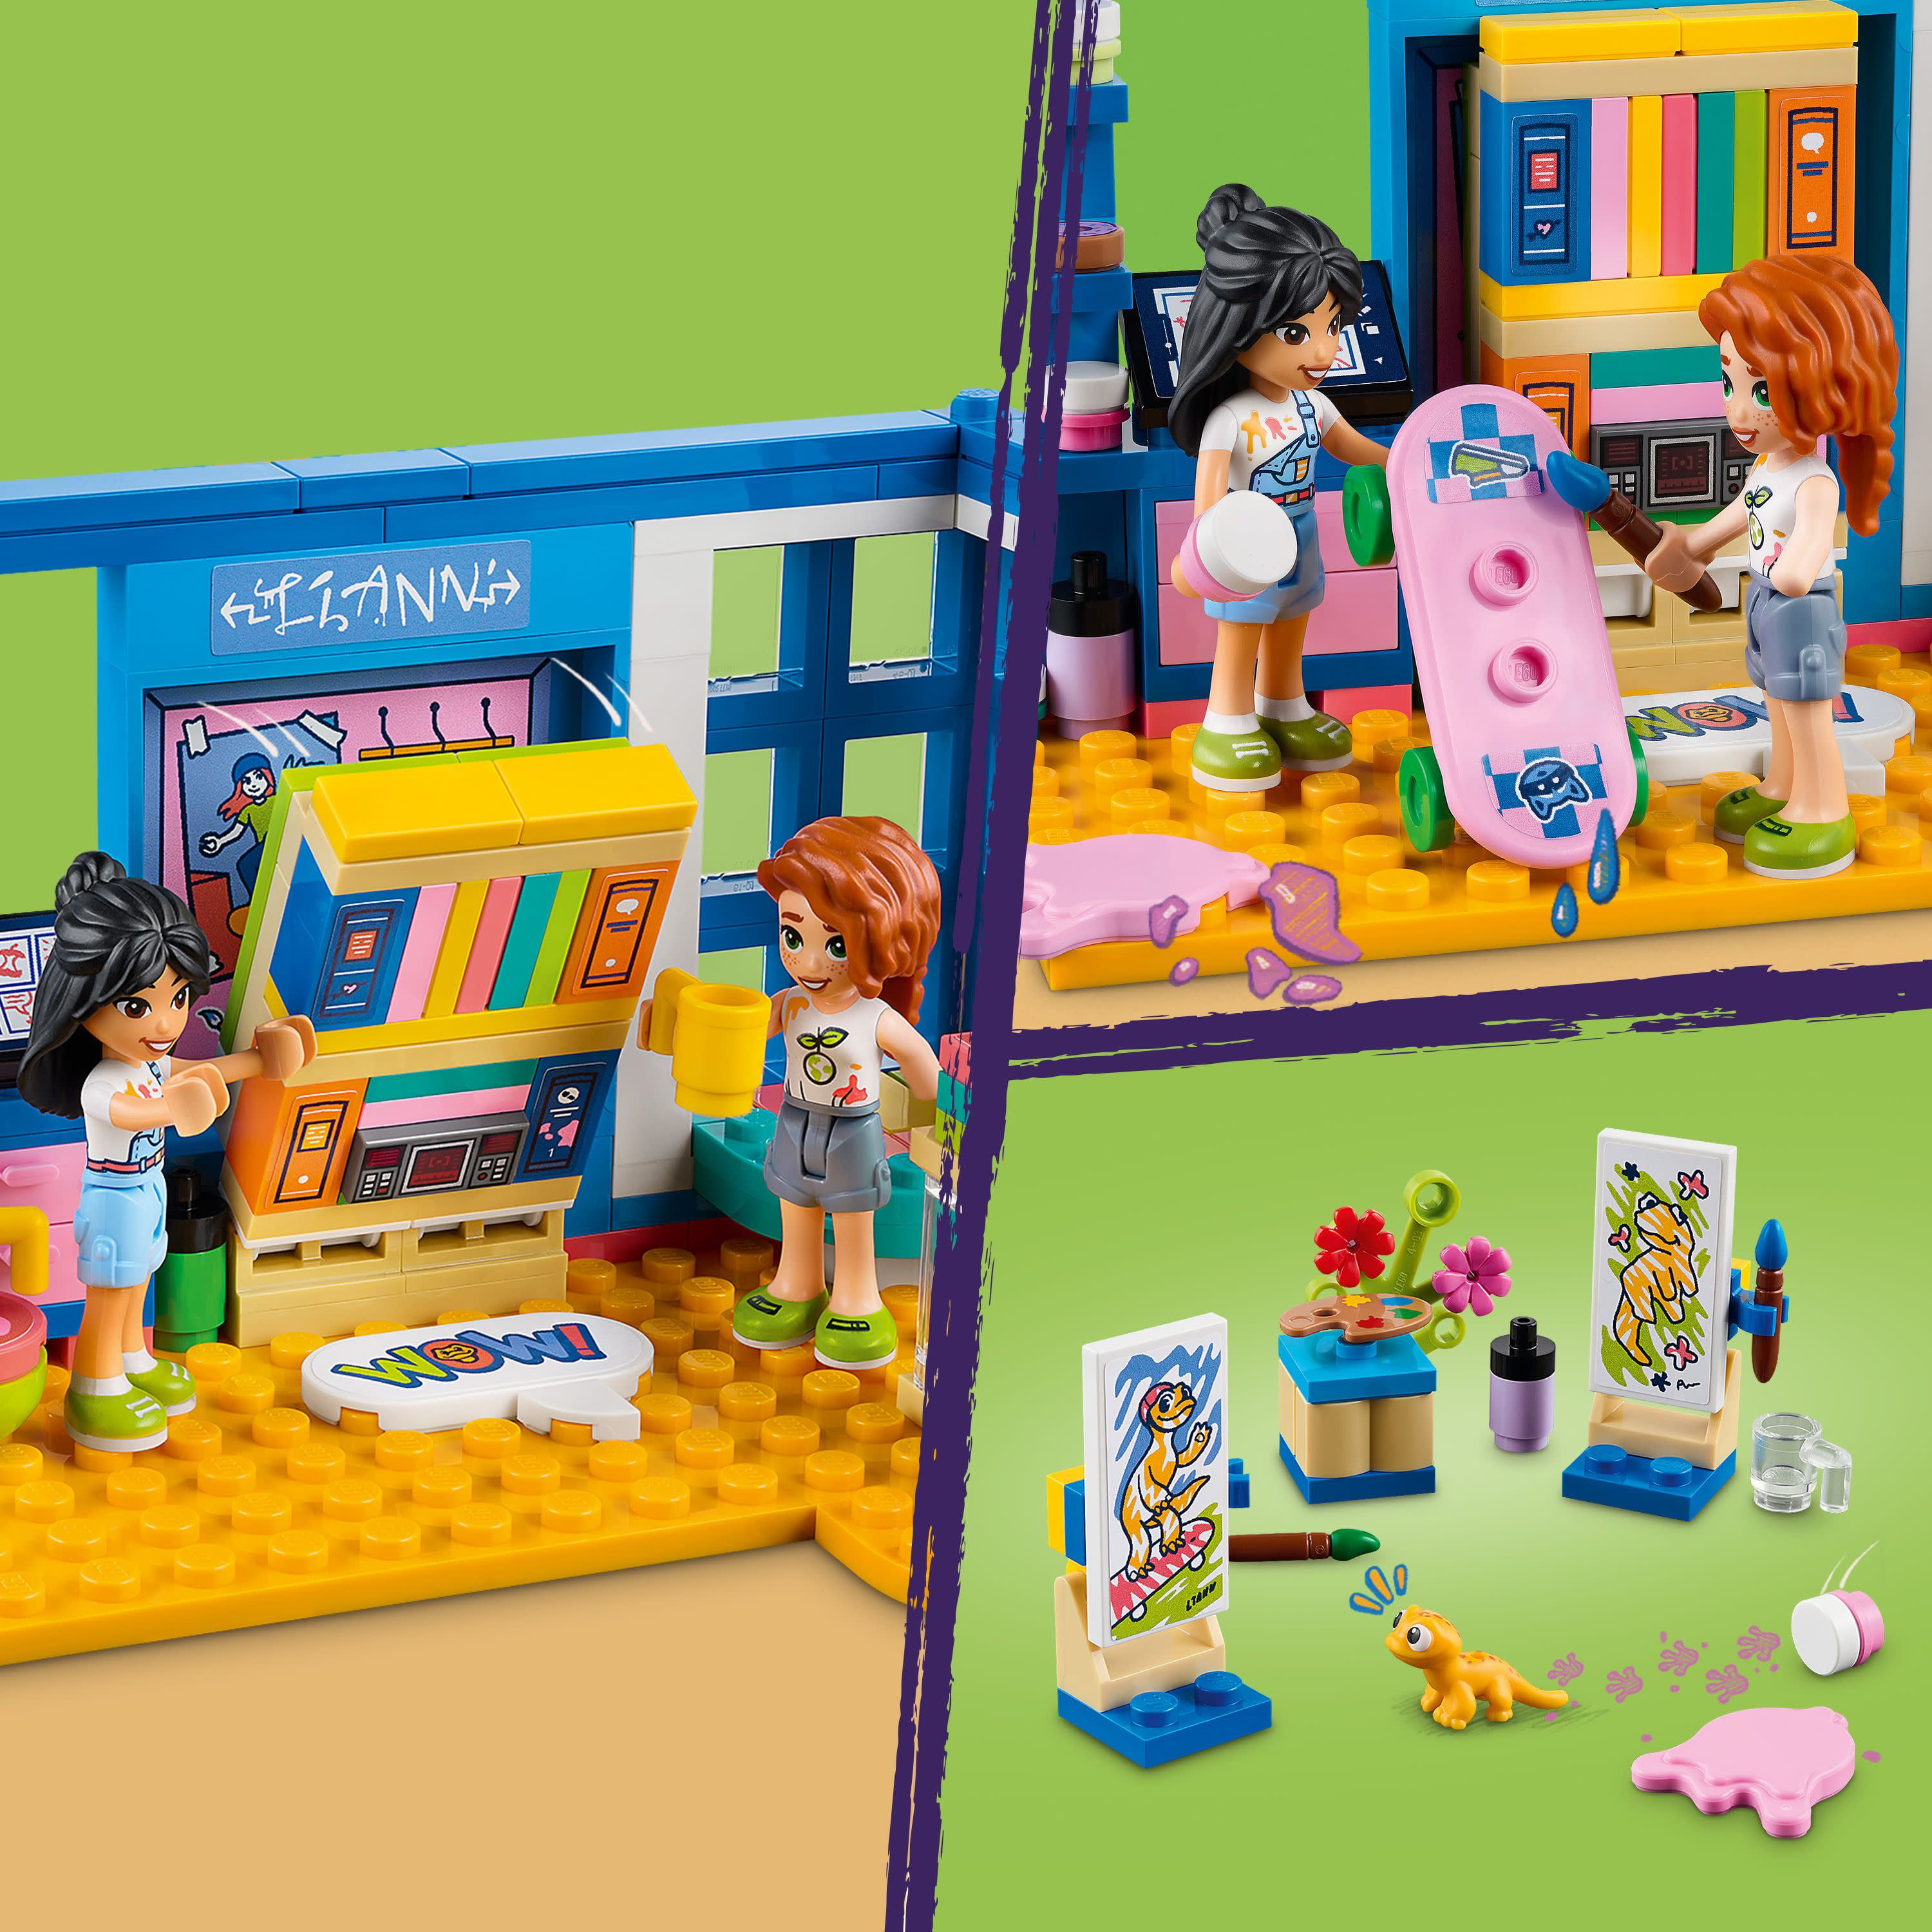 LEGO Friends Liann's Room Mini-Doll & Toy Pet Playset 41739